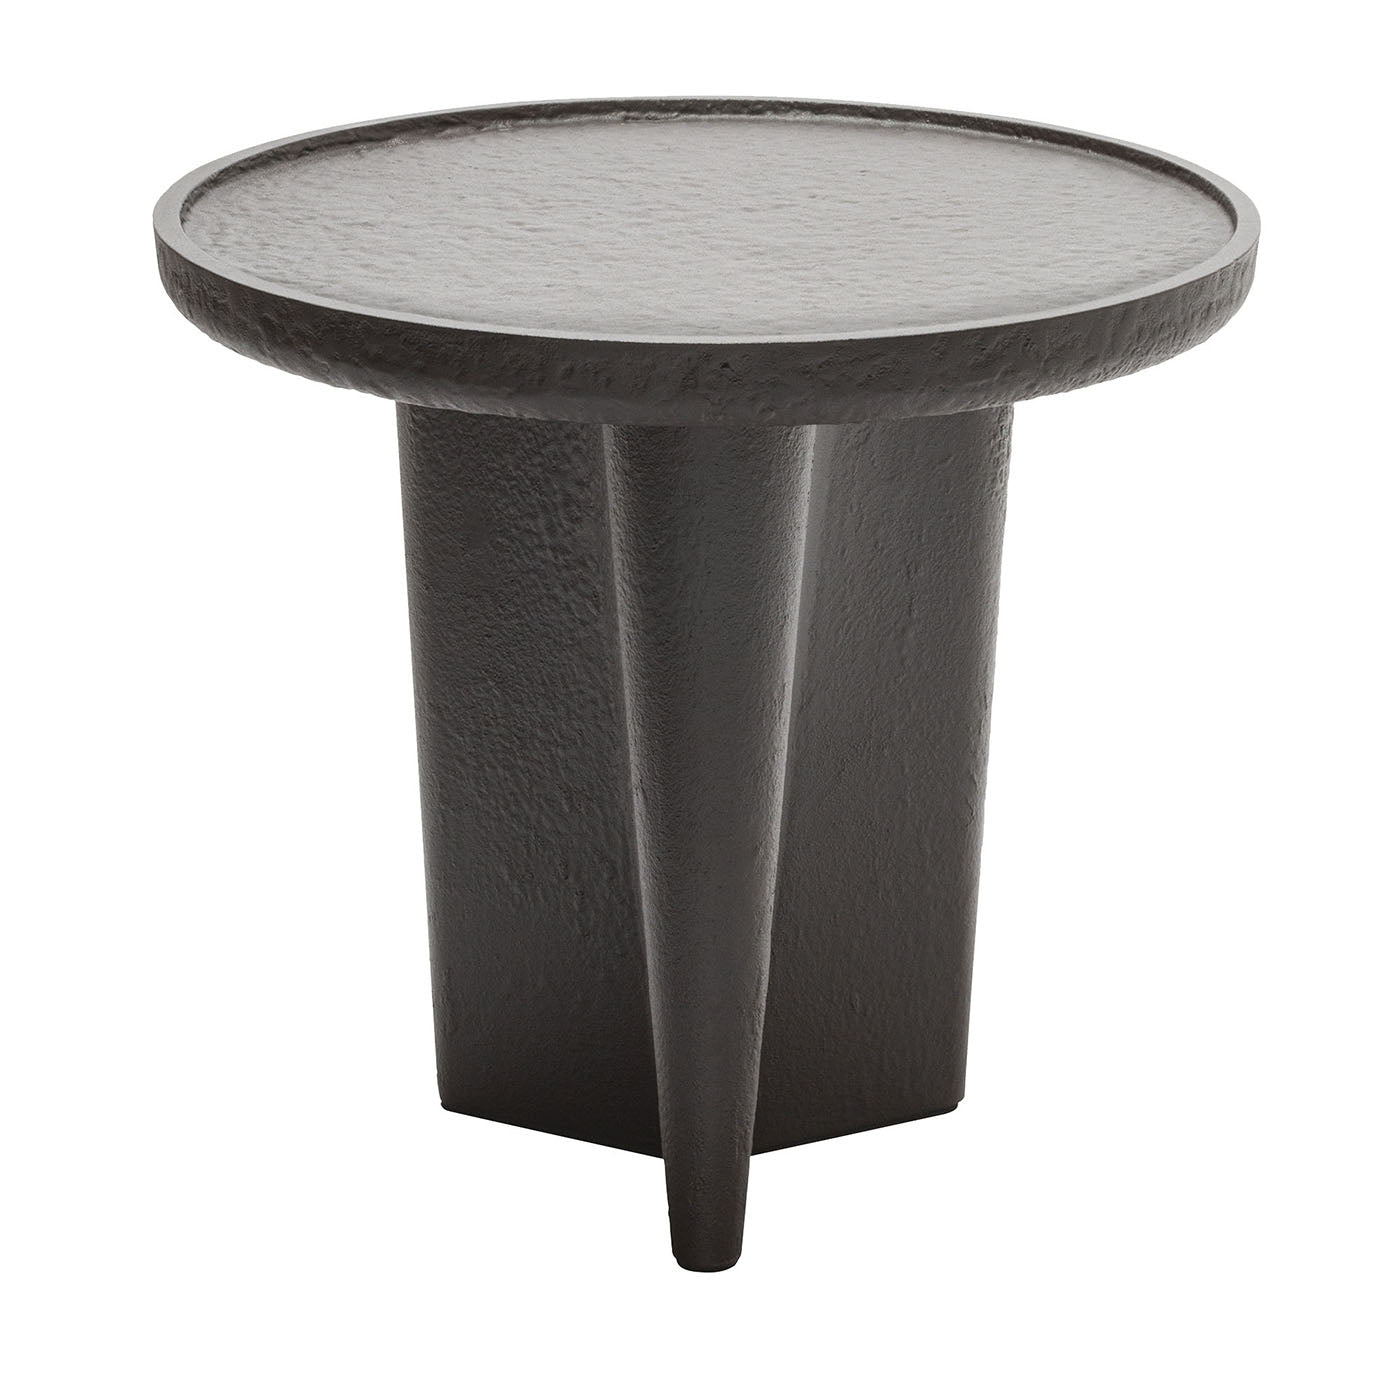 Tanell Imperfect Table d'appoint basse en bronze - Vue principale